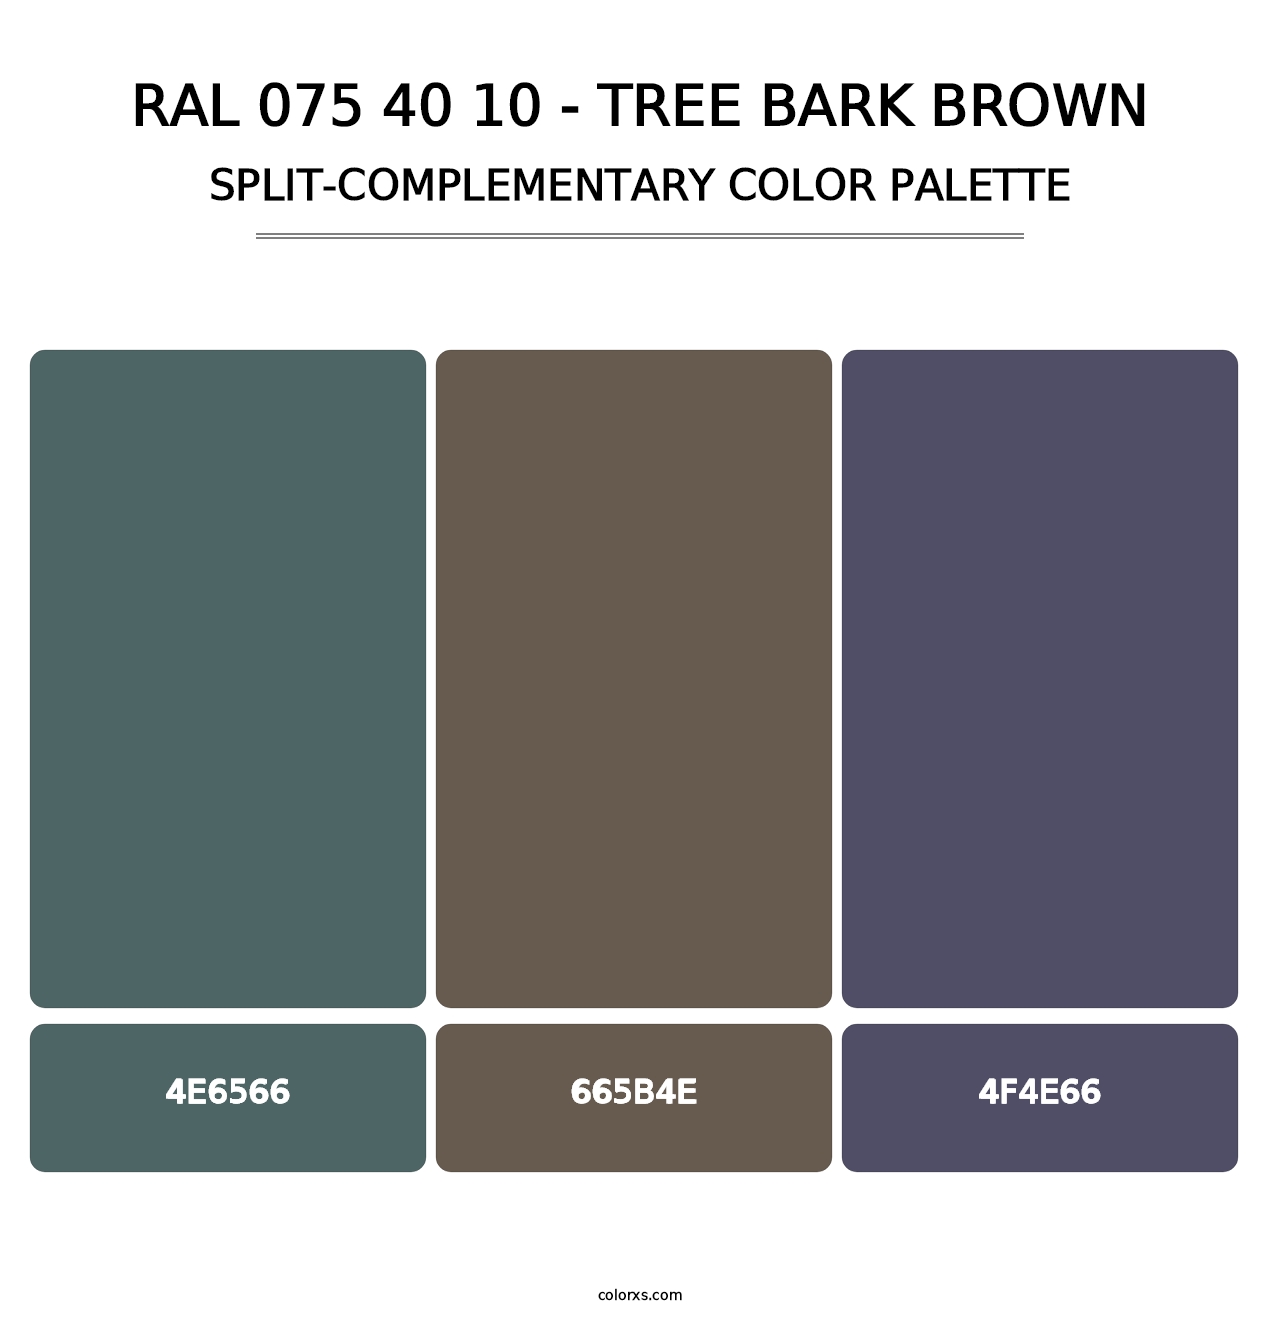 RAL 075 40 10 - Tree Bark Brown - Split-Complementary Color Palette